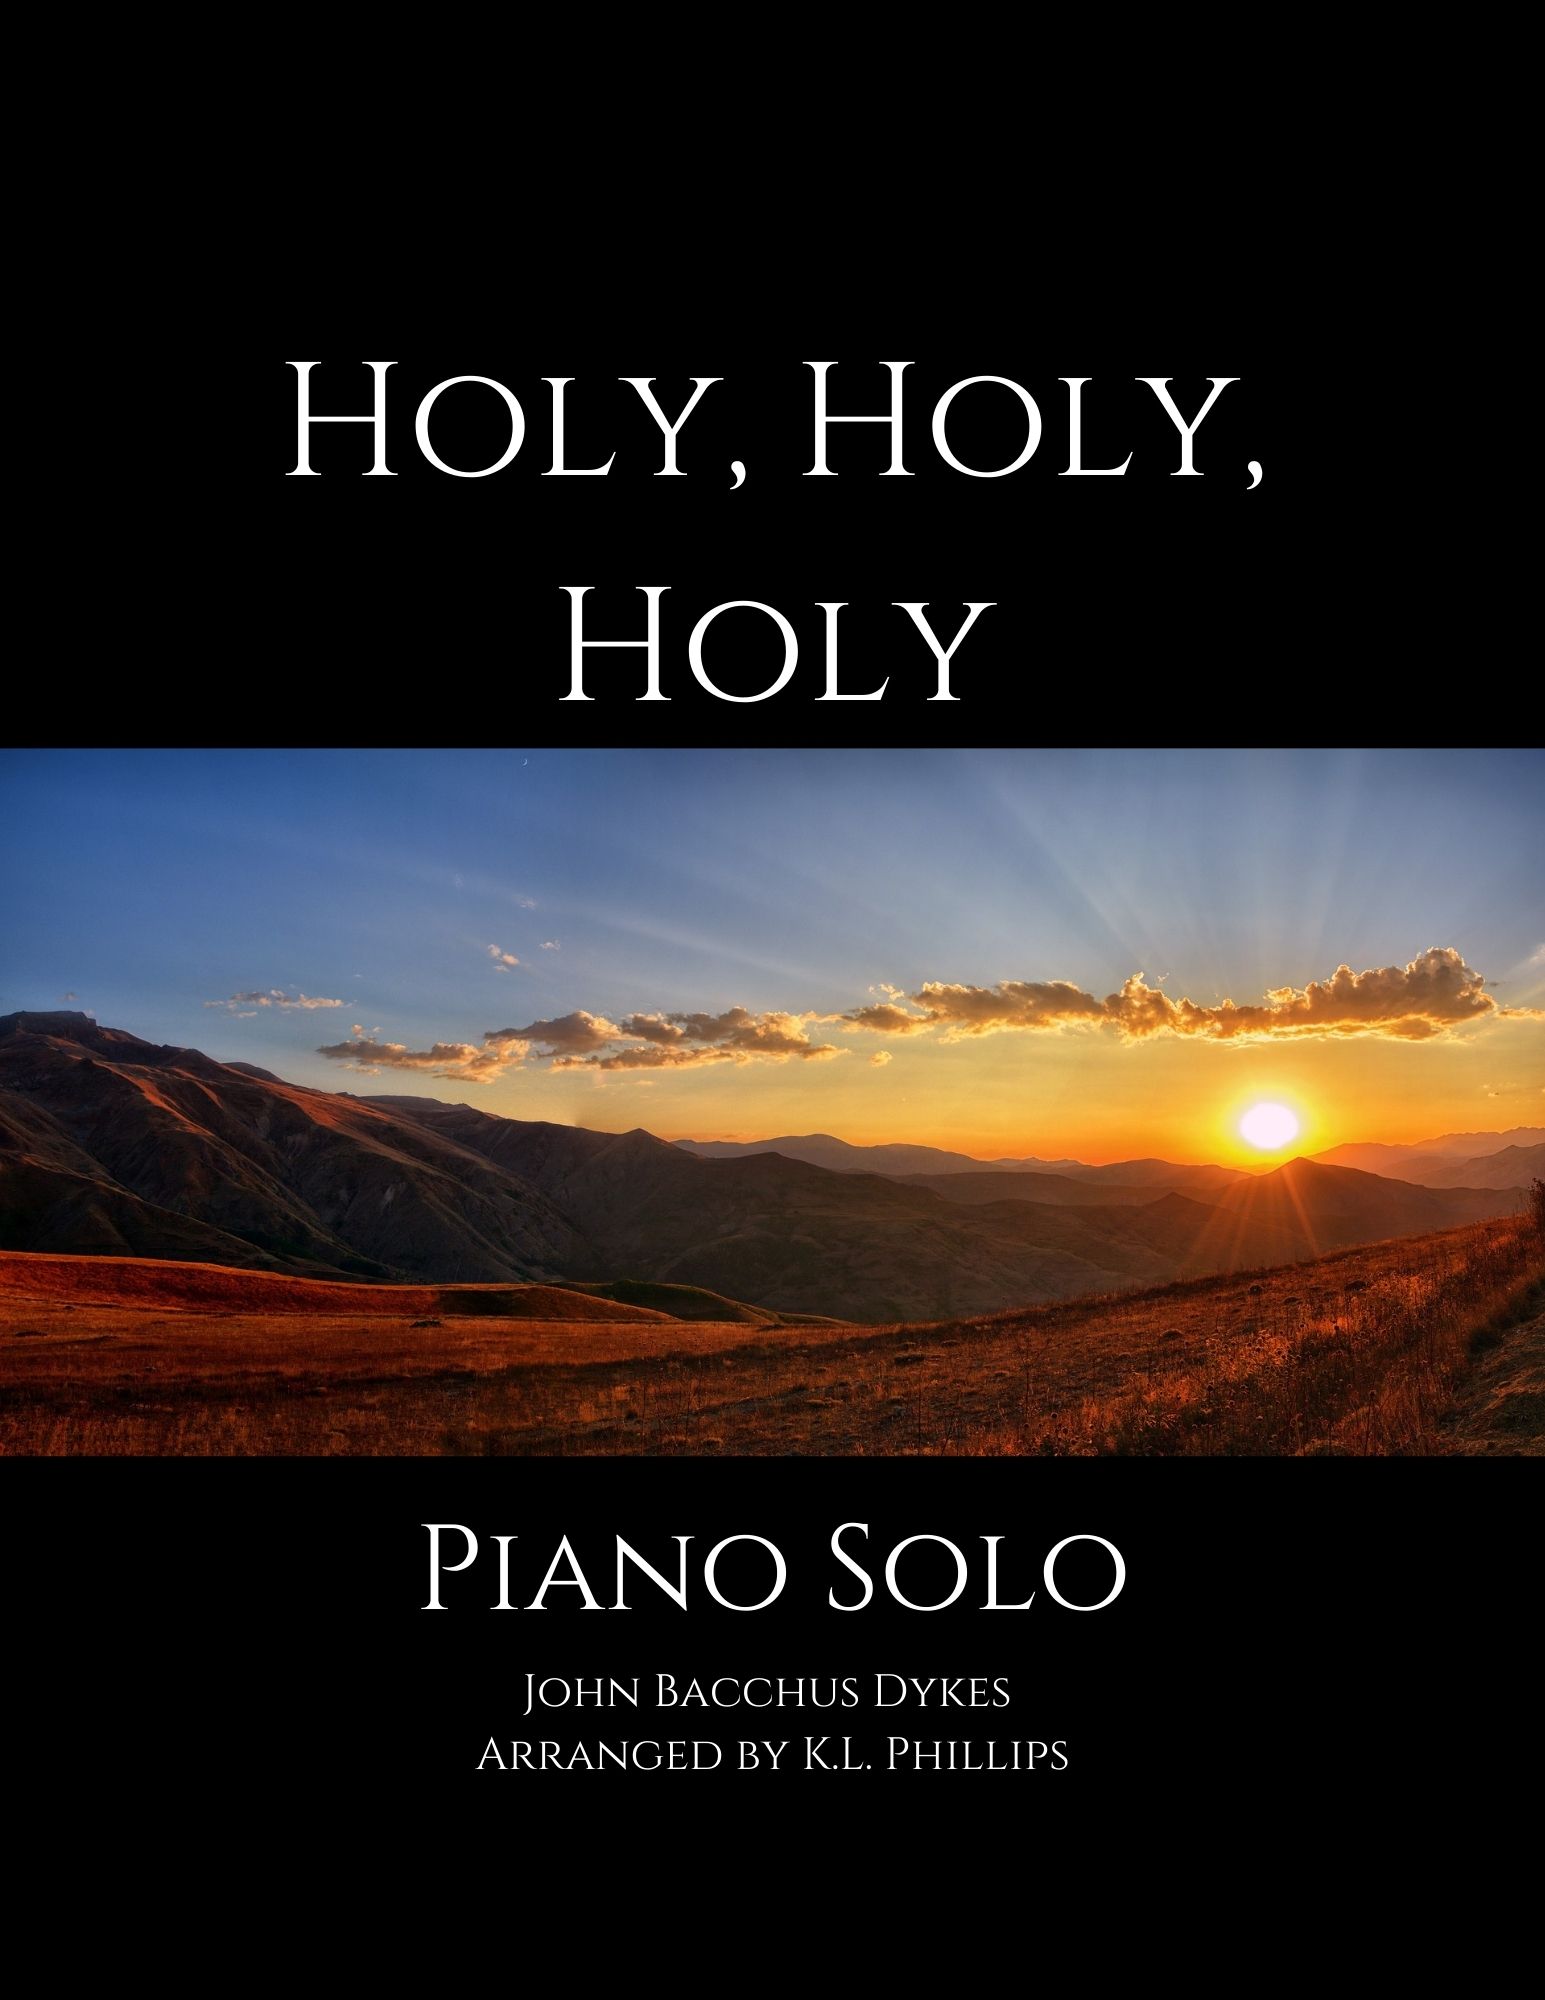 Holy, Holy, Holy - Piano Solo - Sheet Music Marketplace